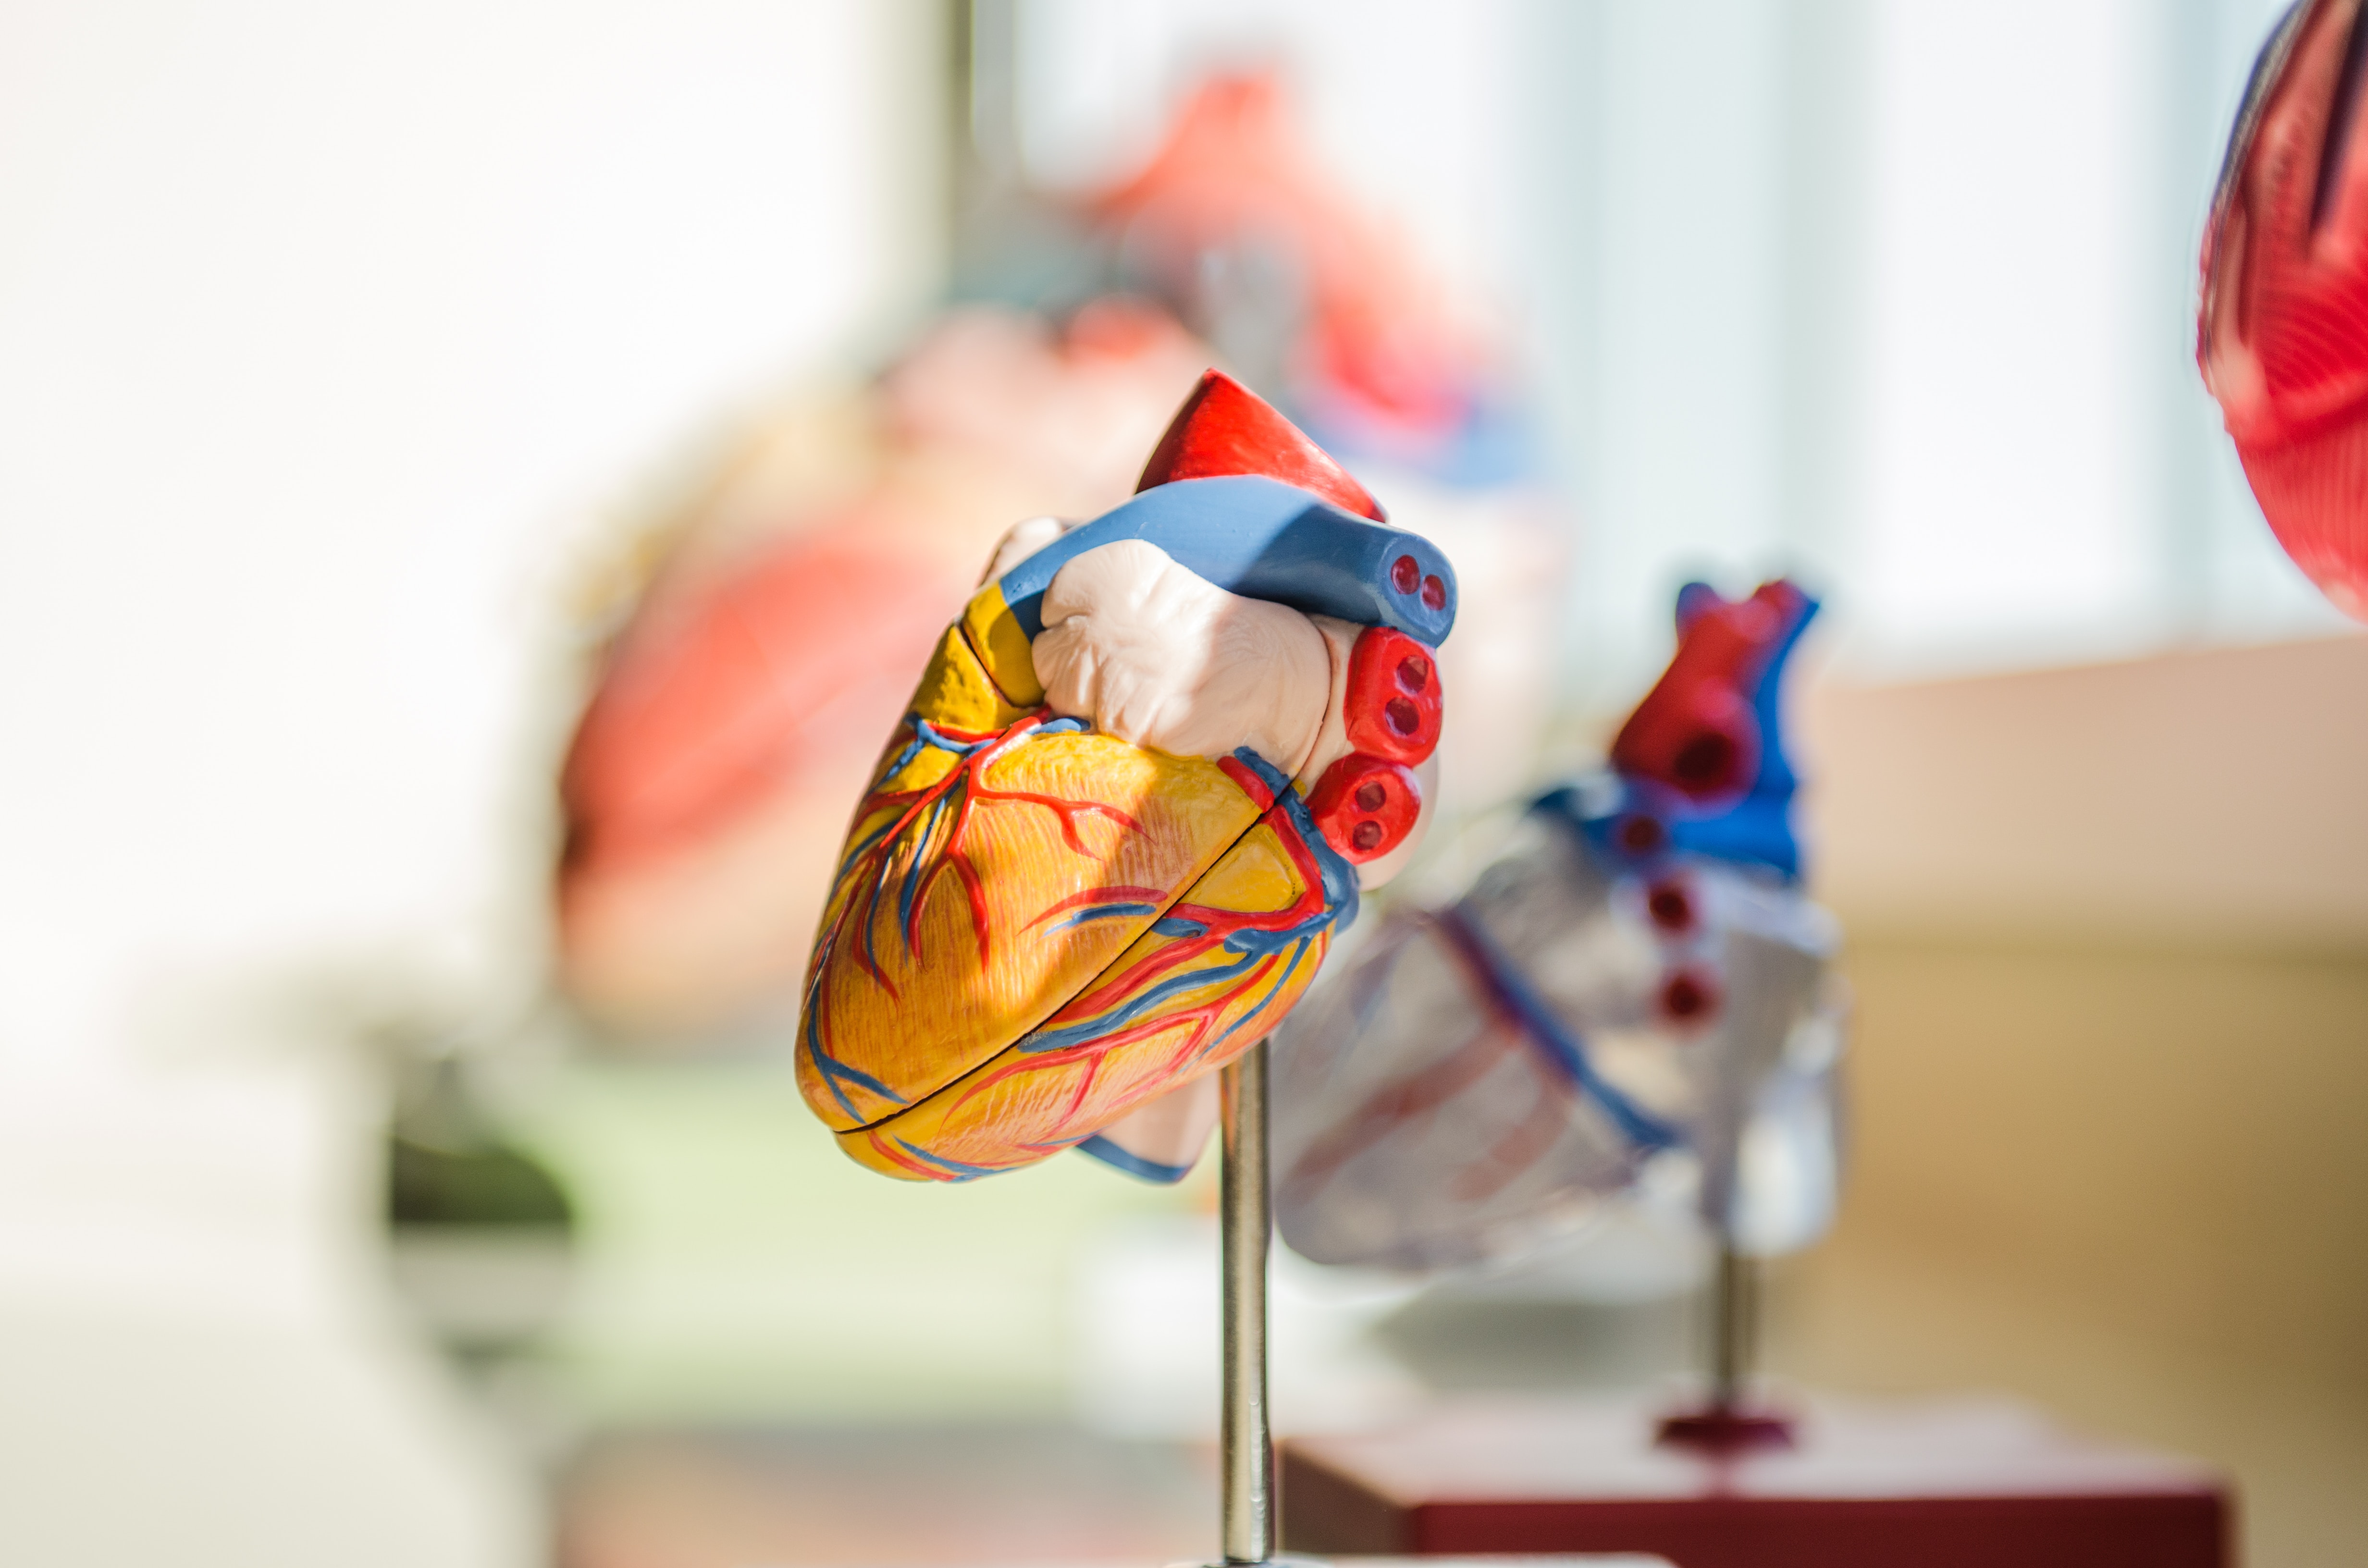 heart organ model anatomy